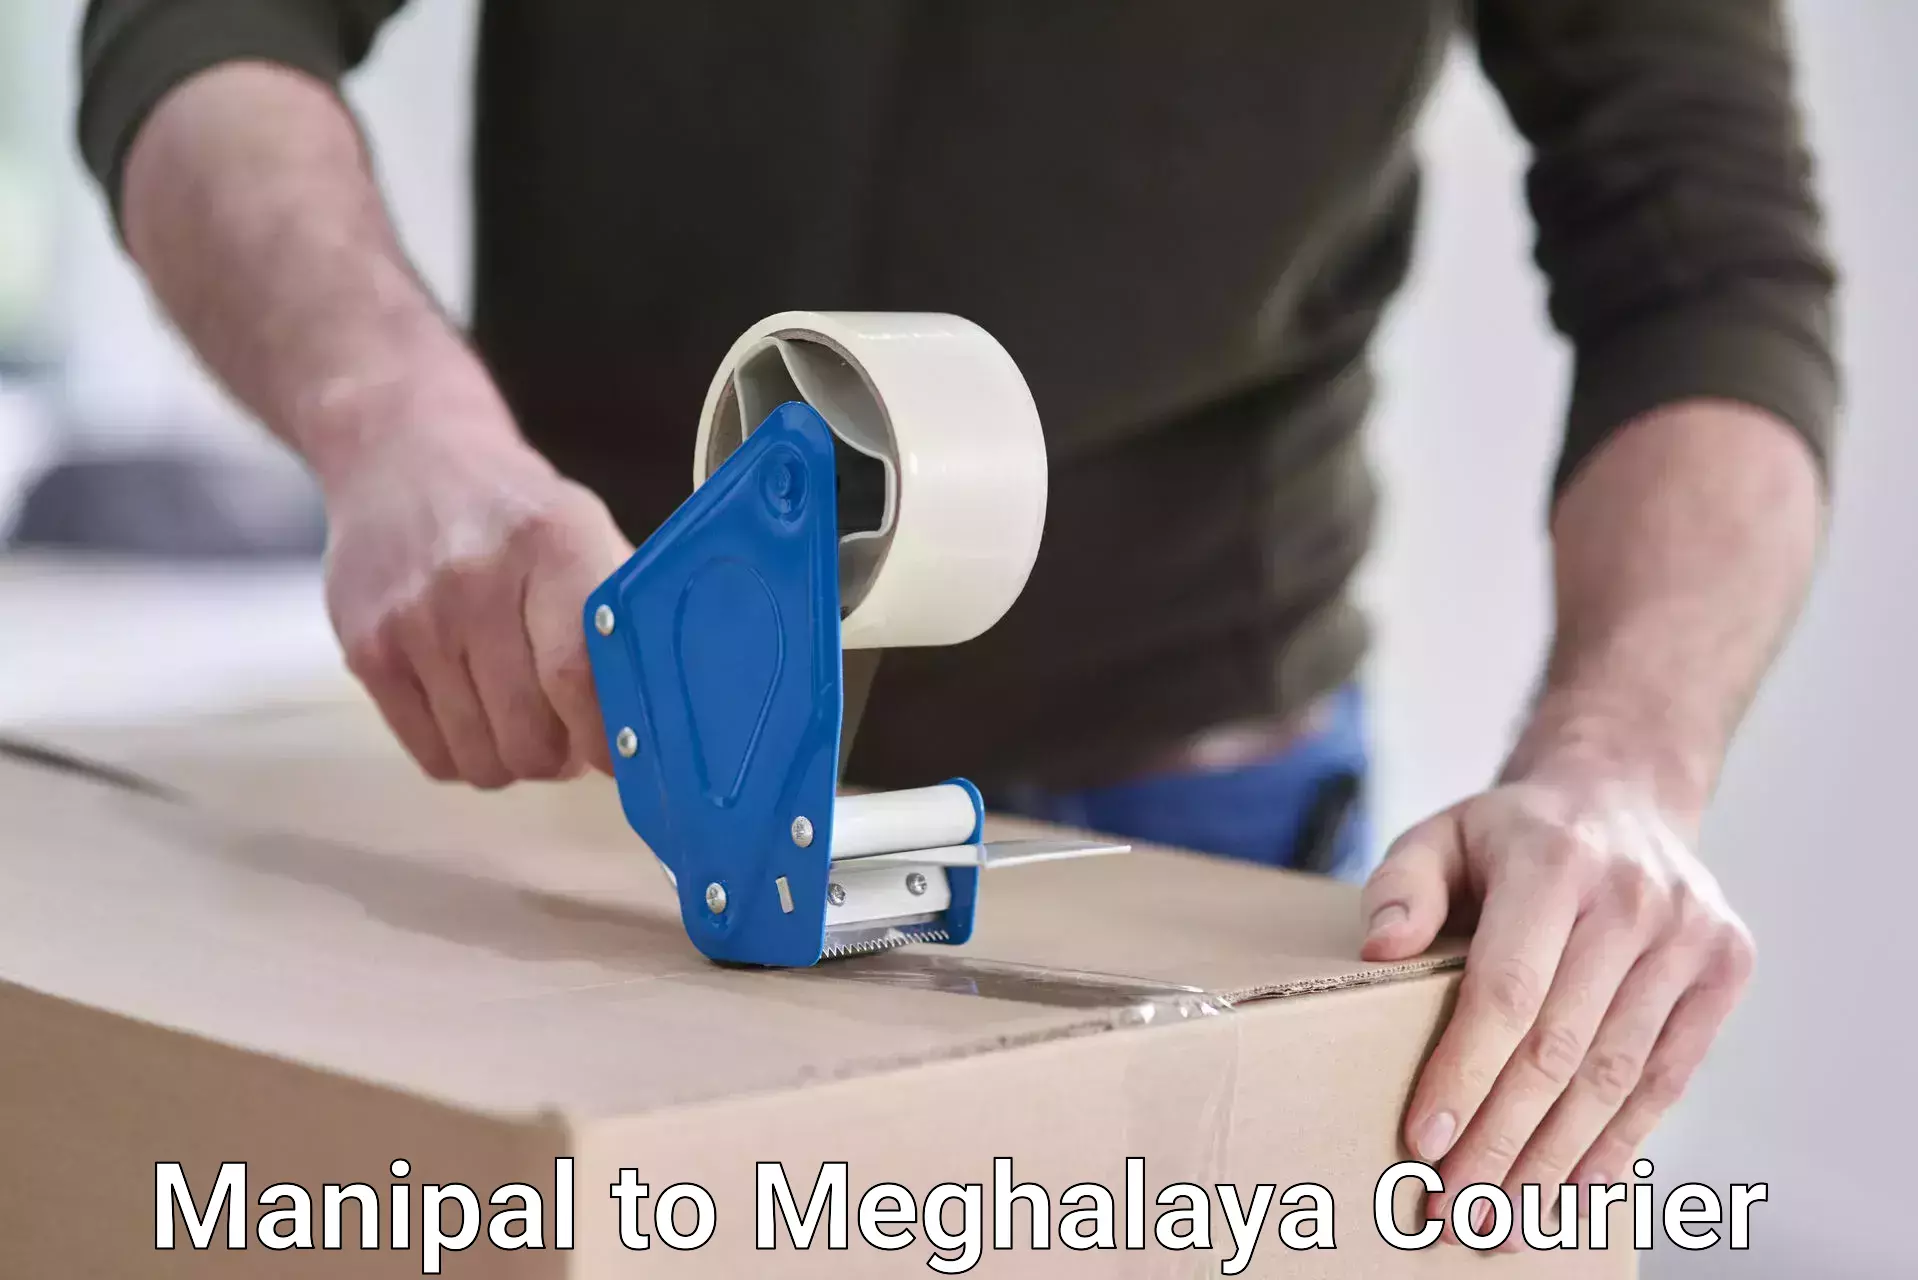 Bulk courier orders Manipal to Meghalaya